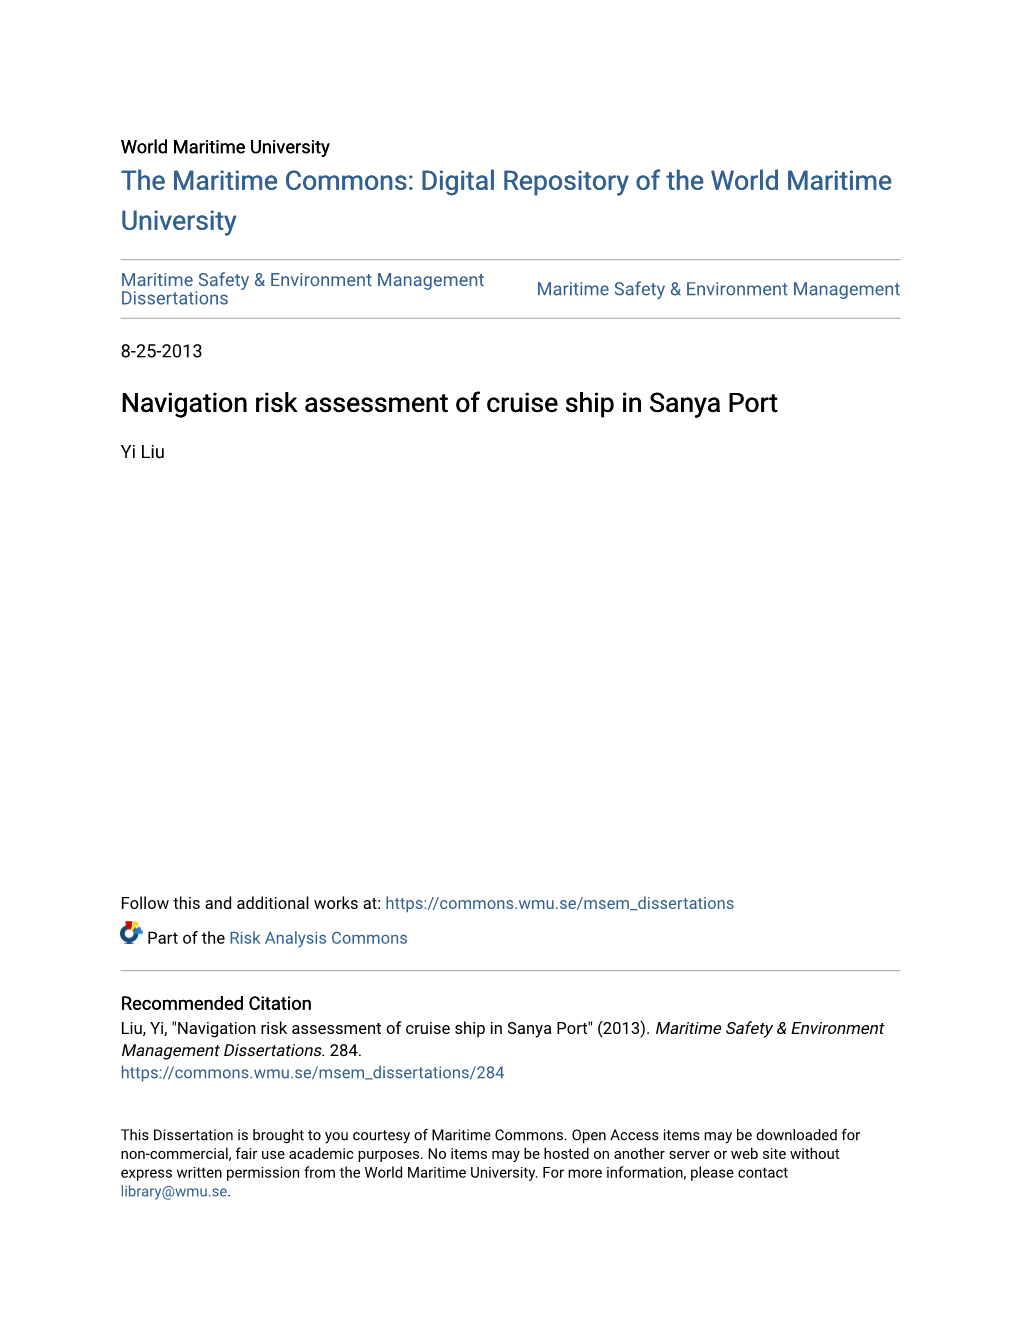 Navigation Risk Assessment of Cruise Ship in Sanya Port